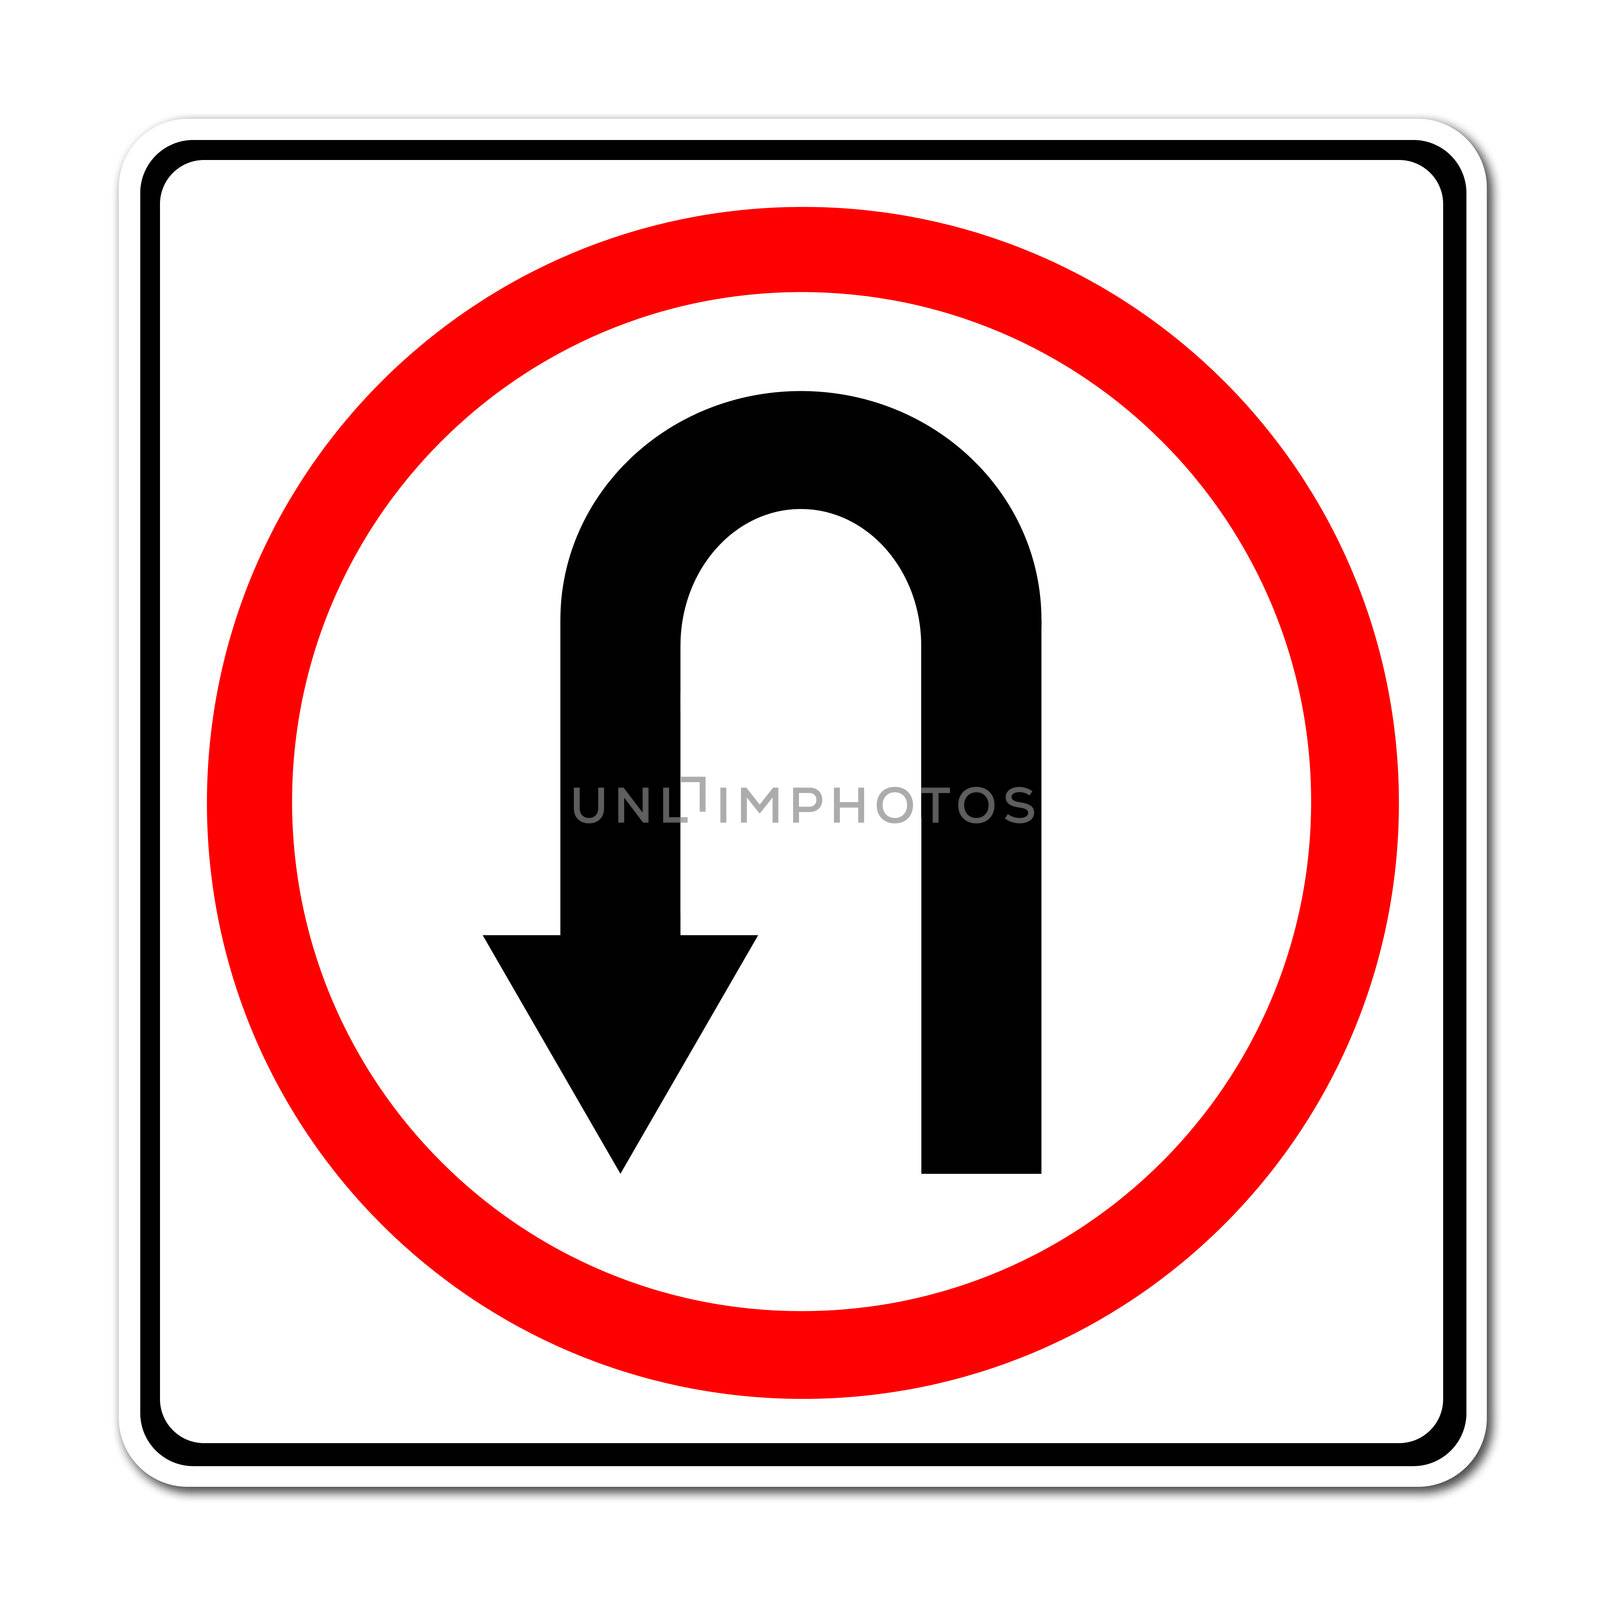 Turn back road sign on white background